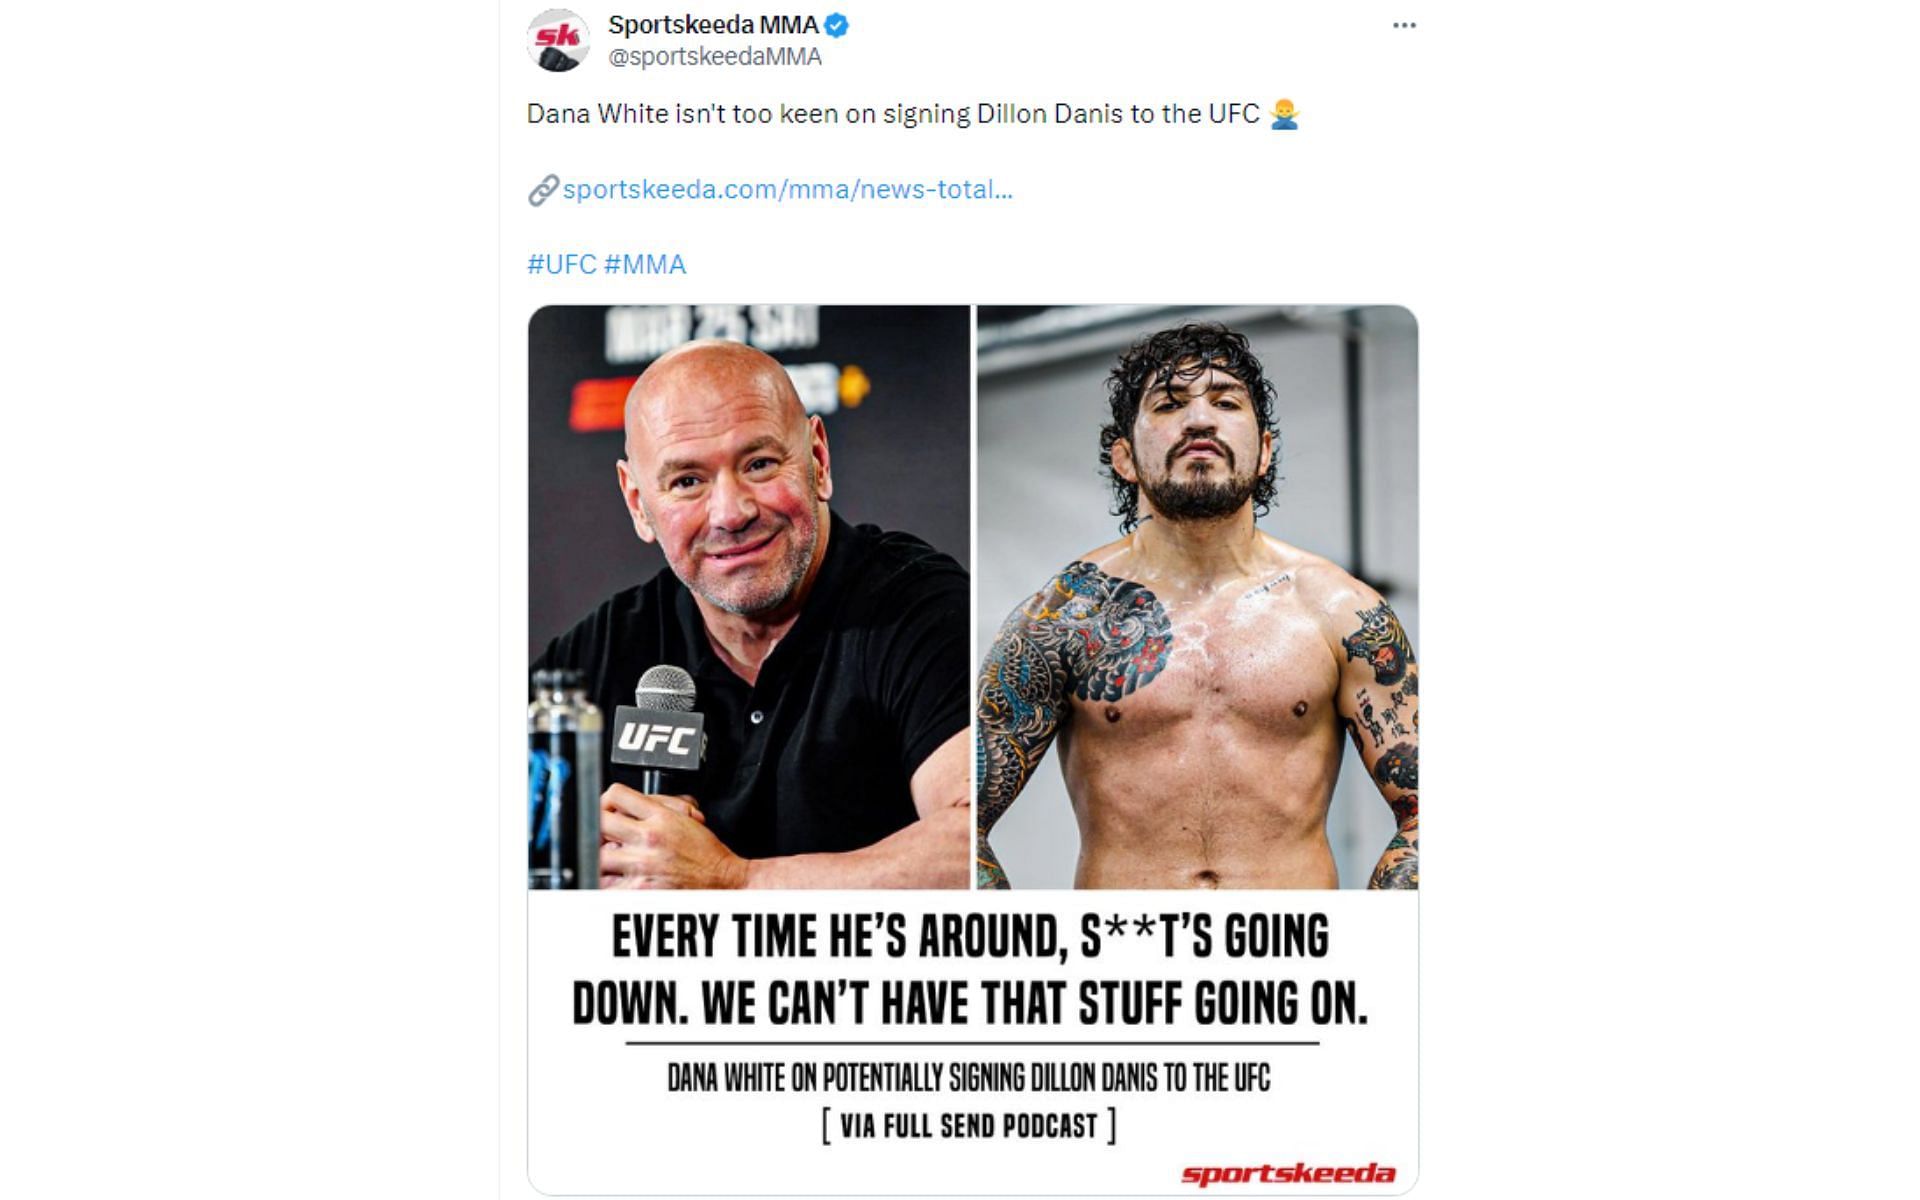 Tweet regarding comments about Dillon Danis in the UFC